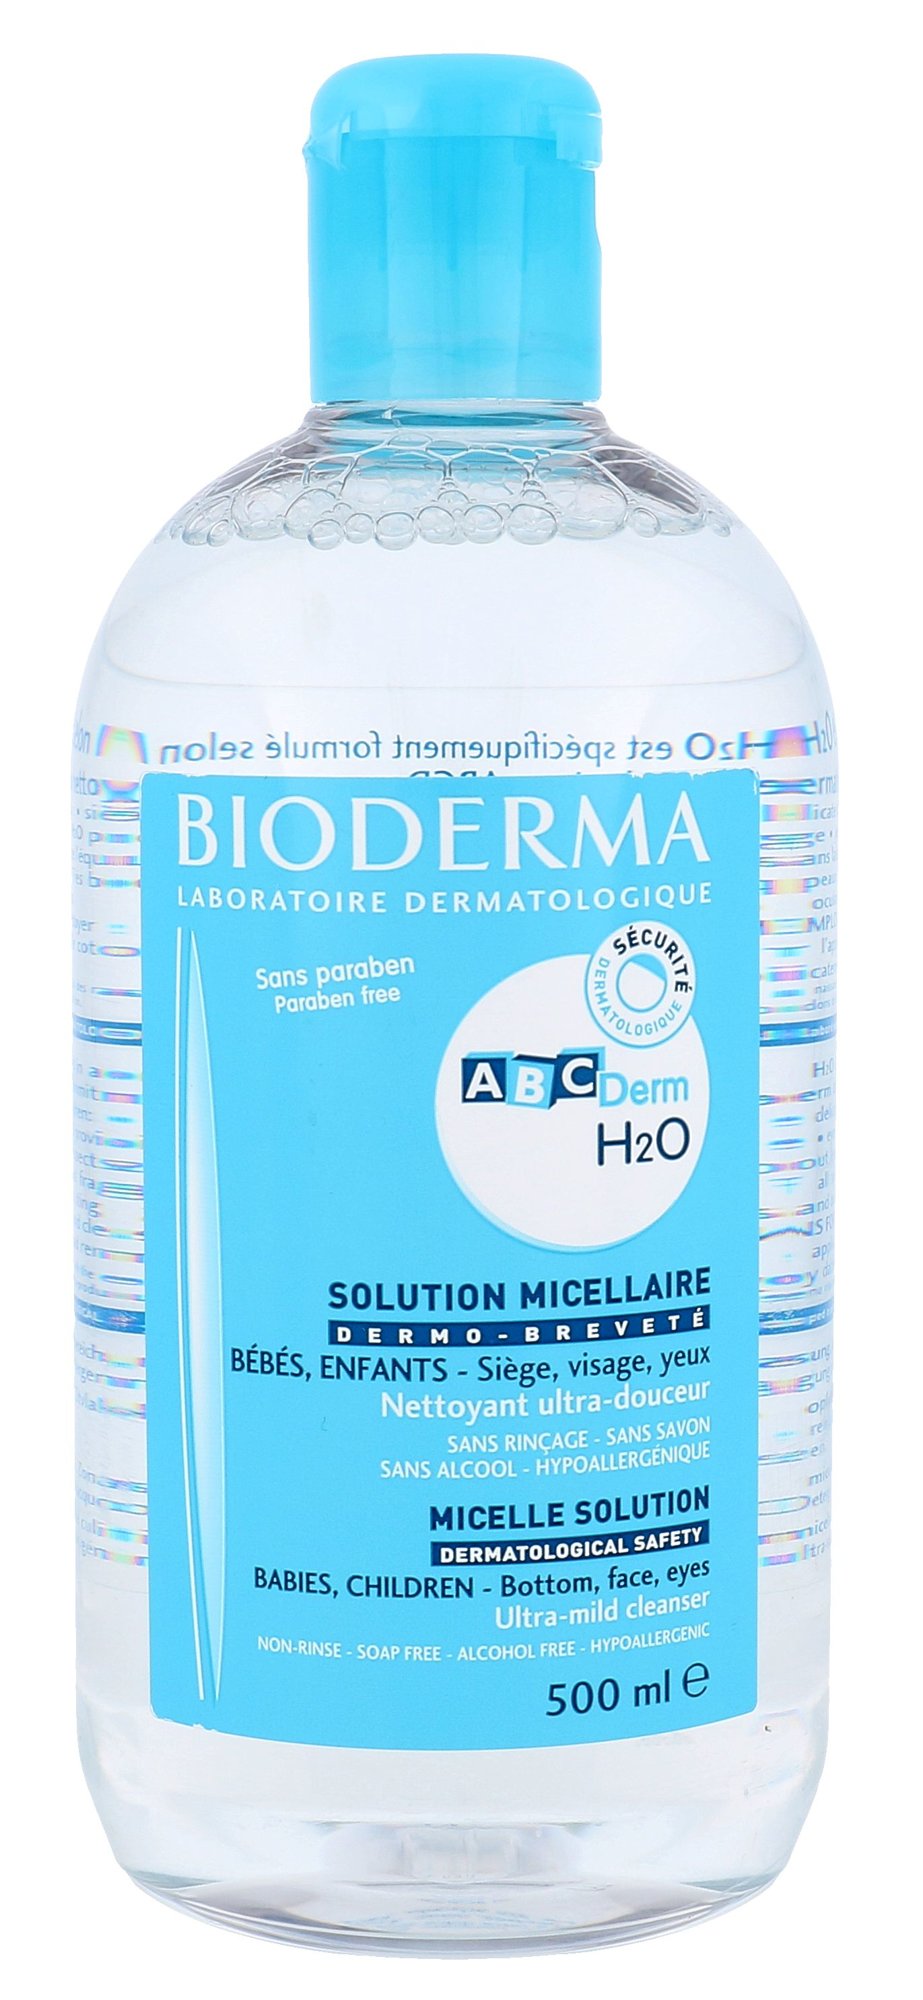 Bioderma ABCDerm H2O Micellar Water